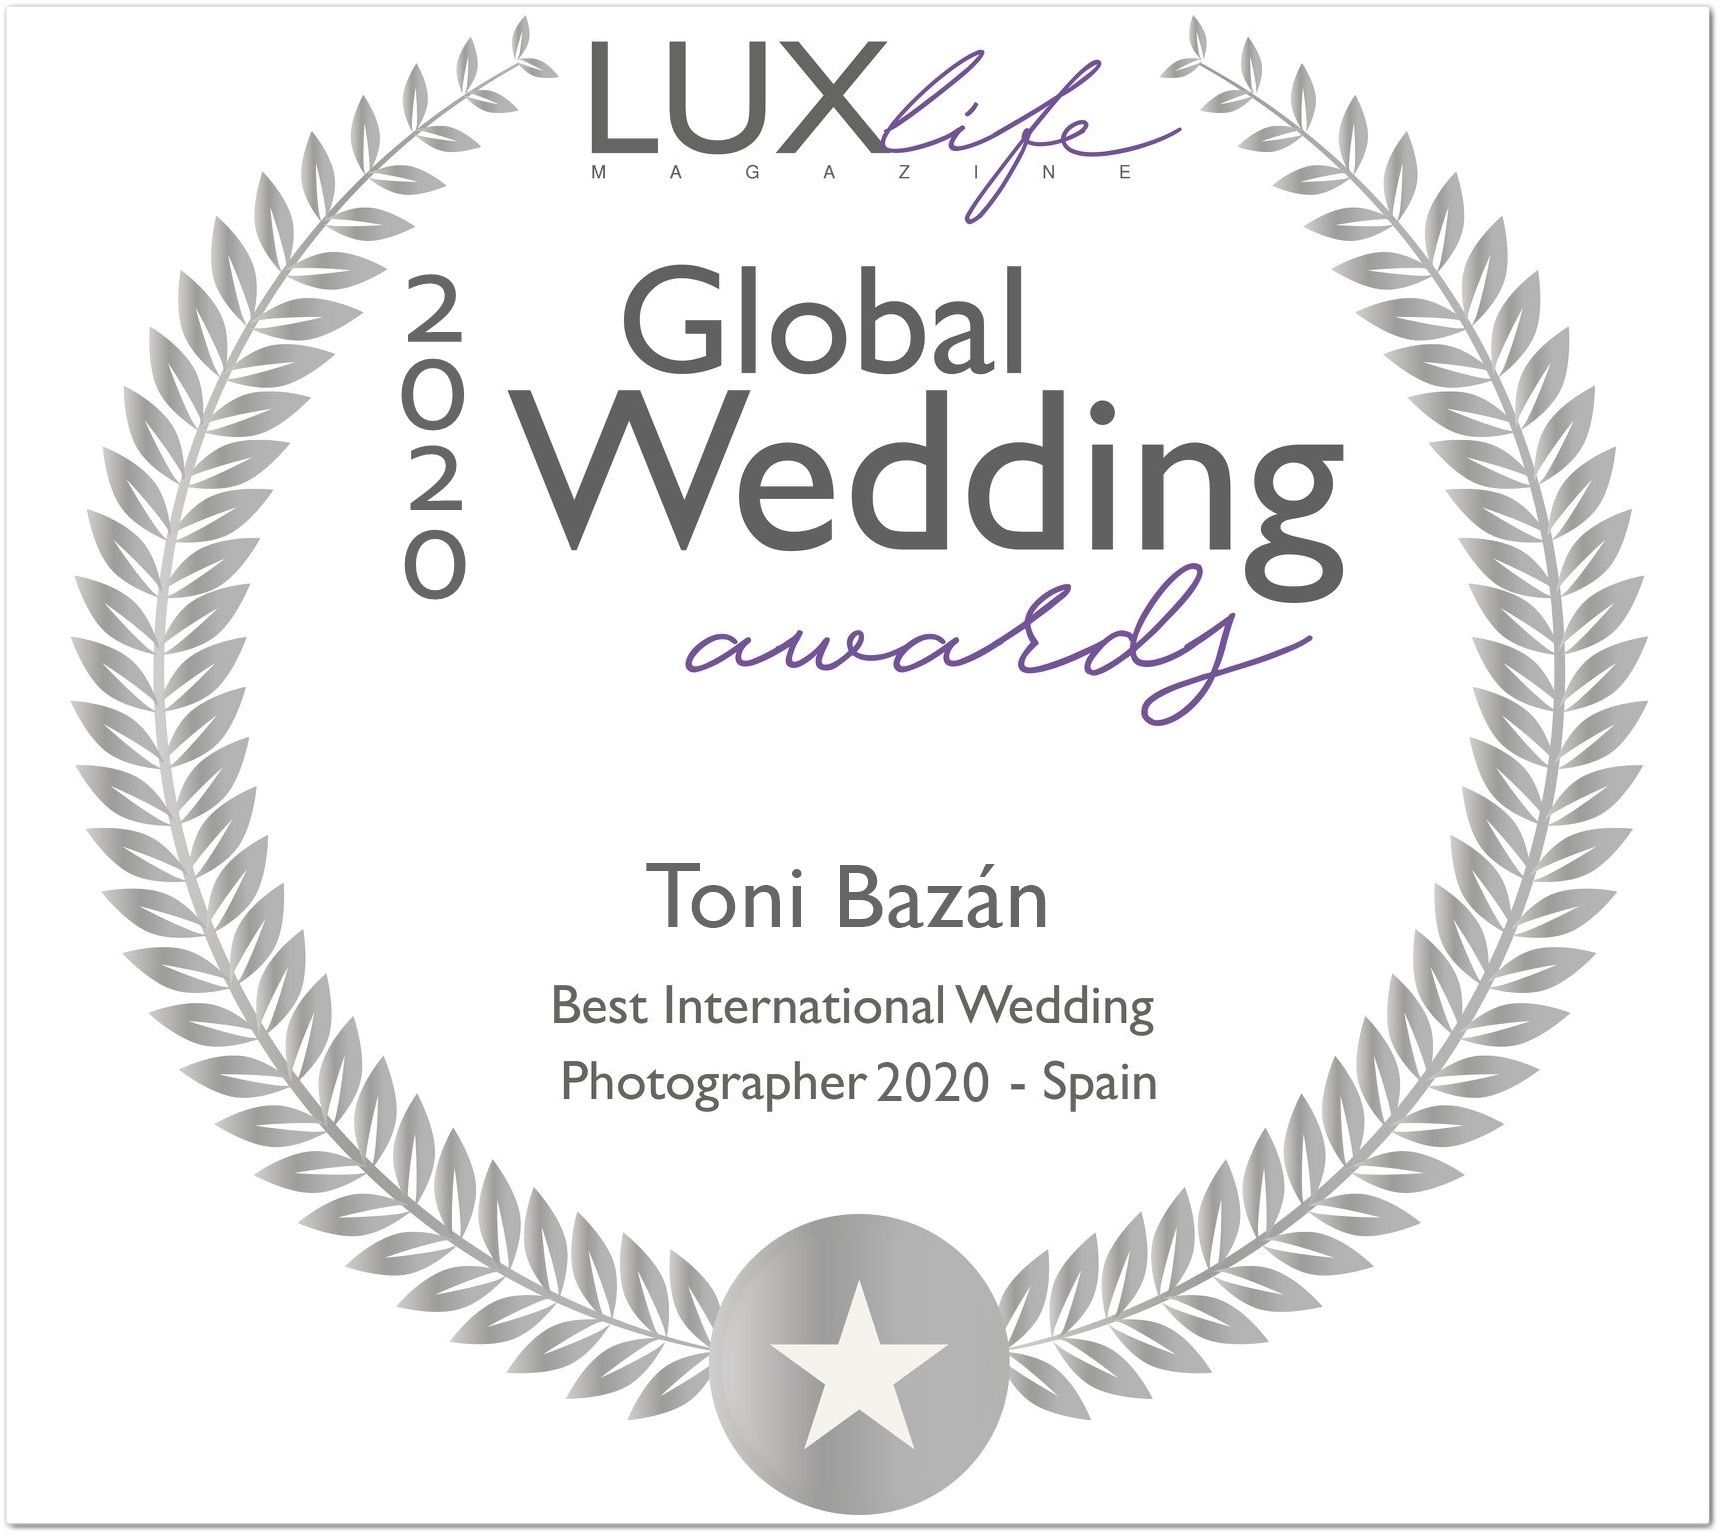 Luxlife wedding awards 2020